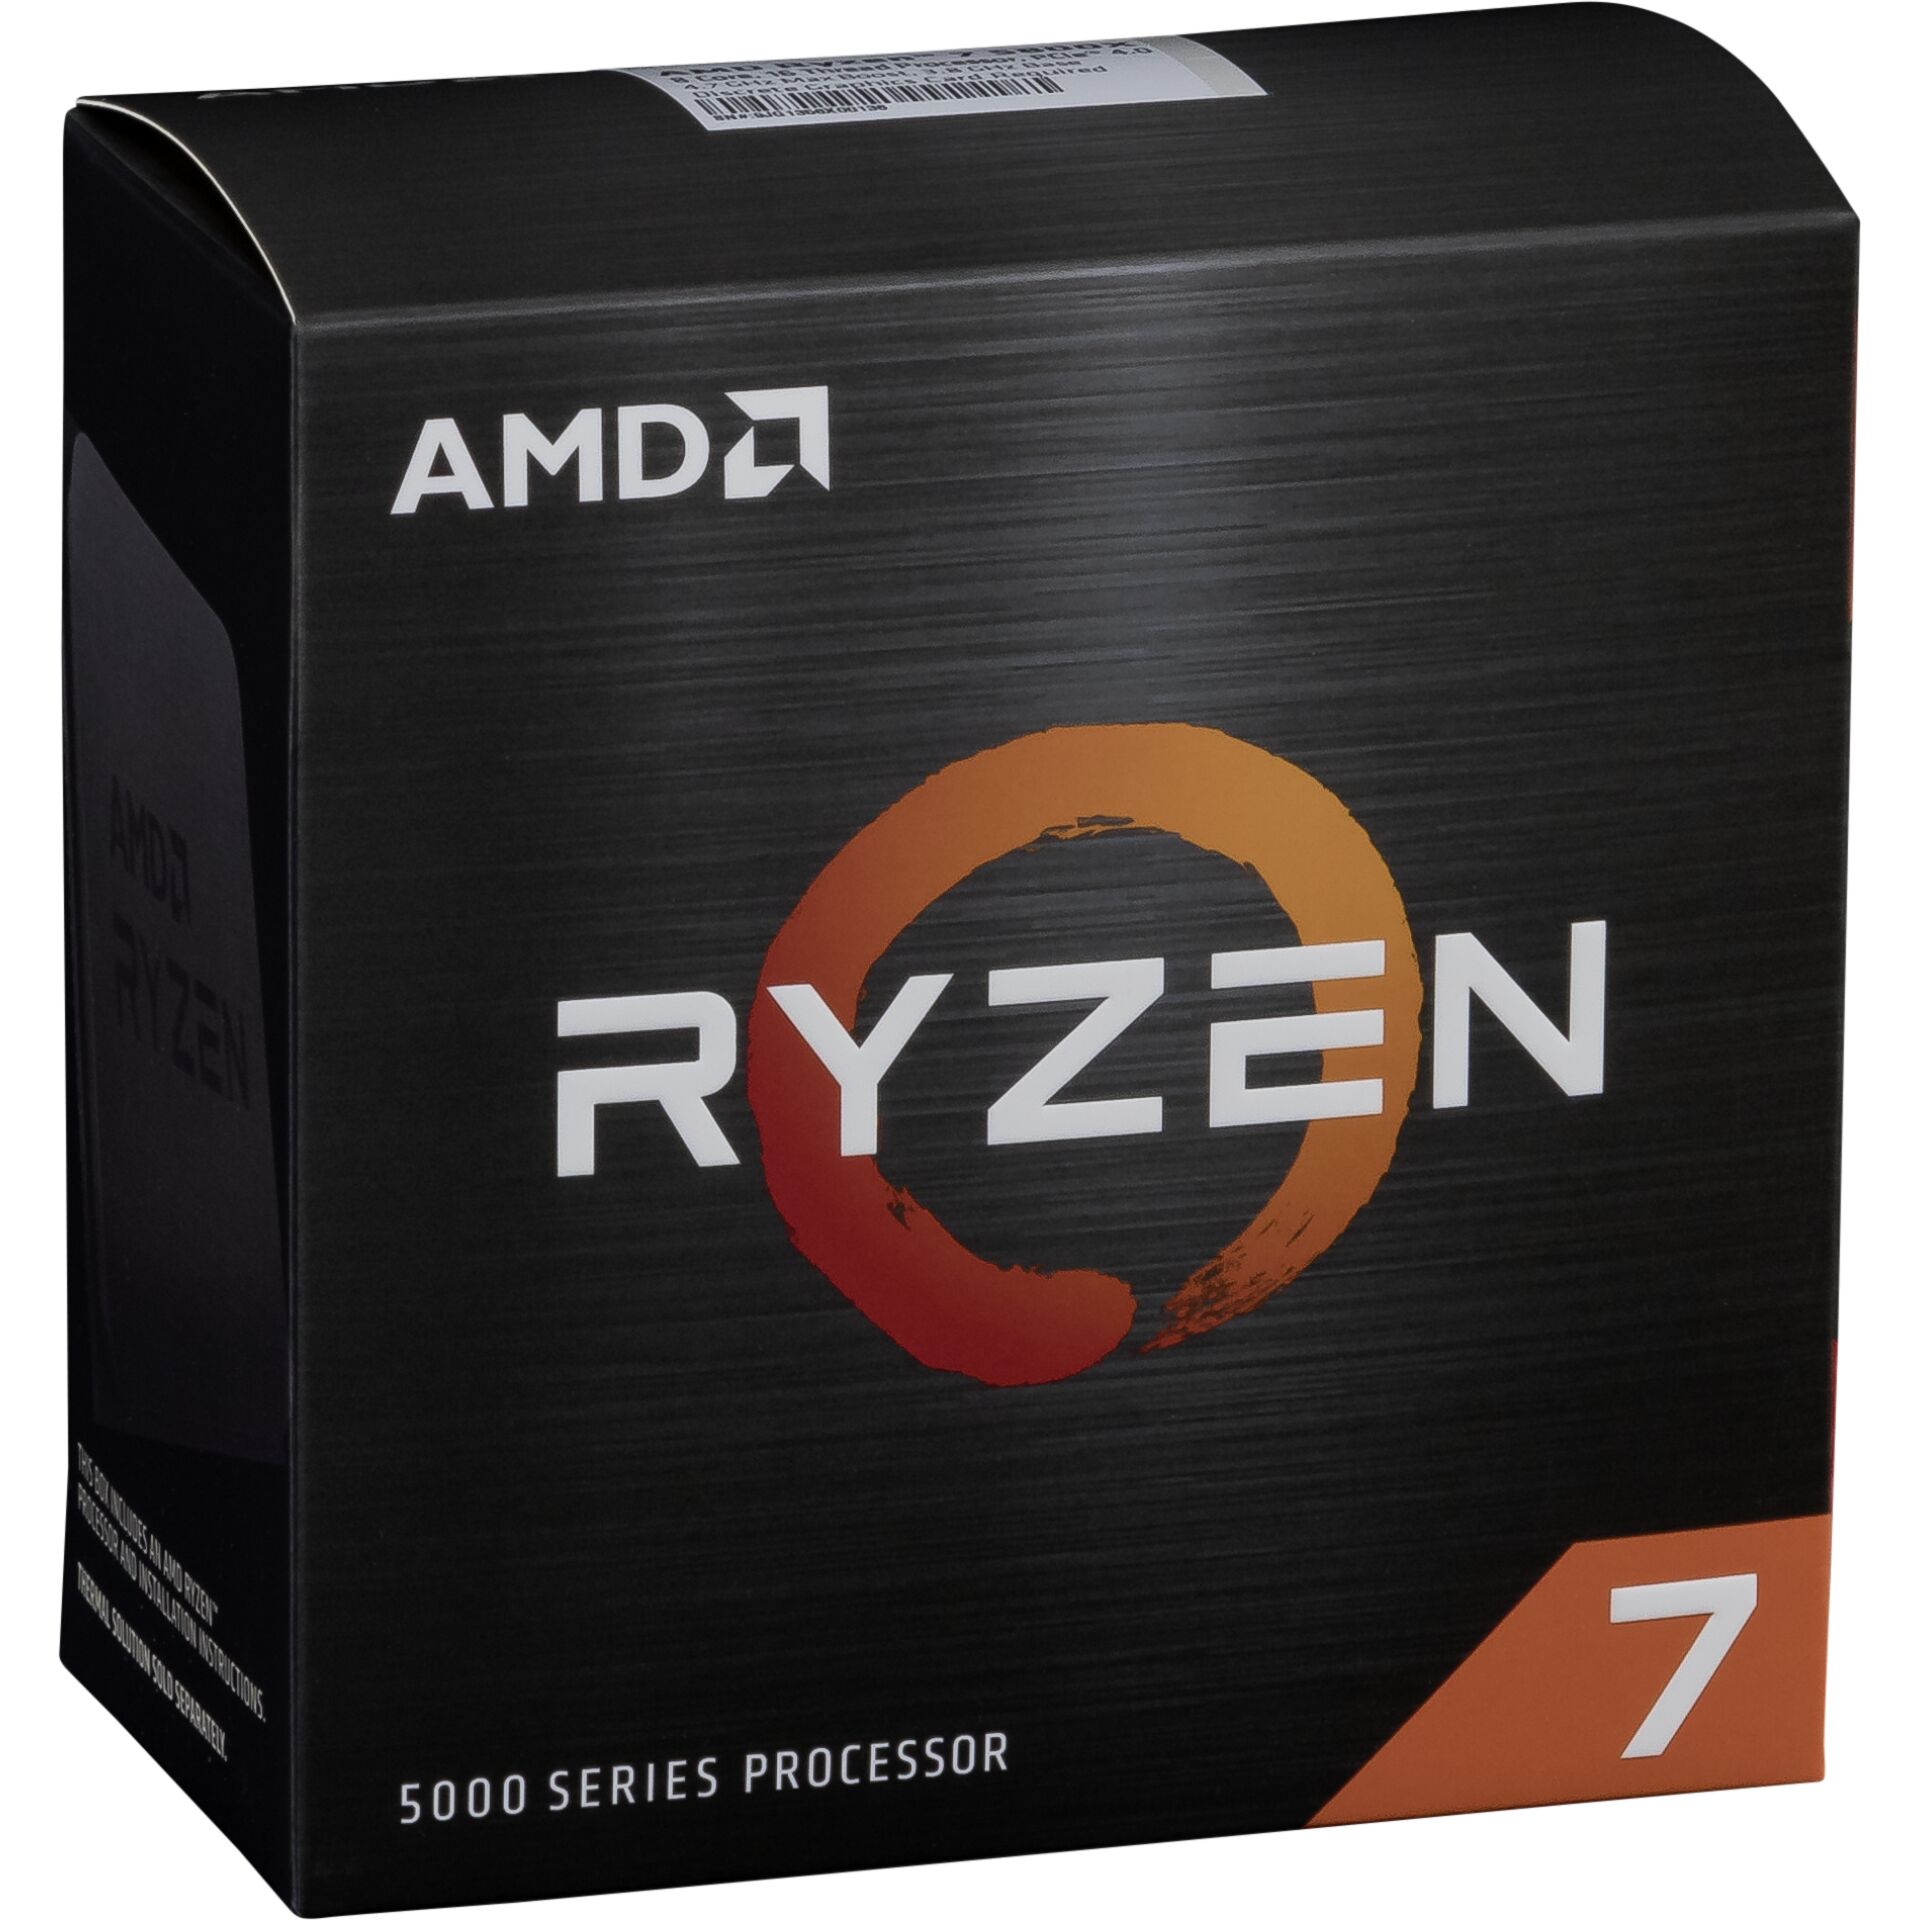 AMD Ryzen 7 5800X, 8C/16T, 3.80-4.70GHz, boxed ohne Kühler, Sockel AM4 (PGA), Vermeer CPU